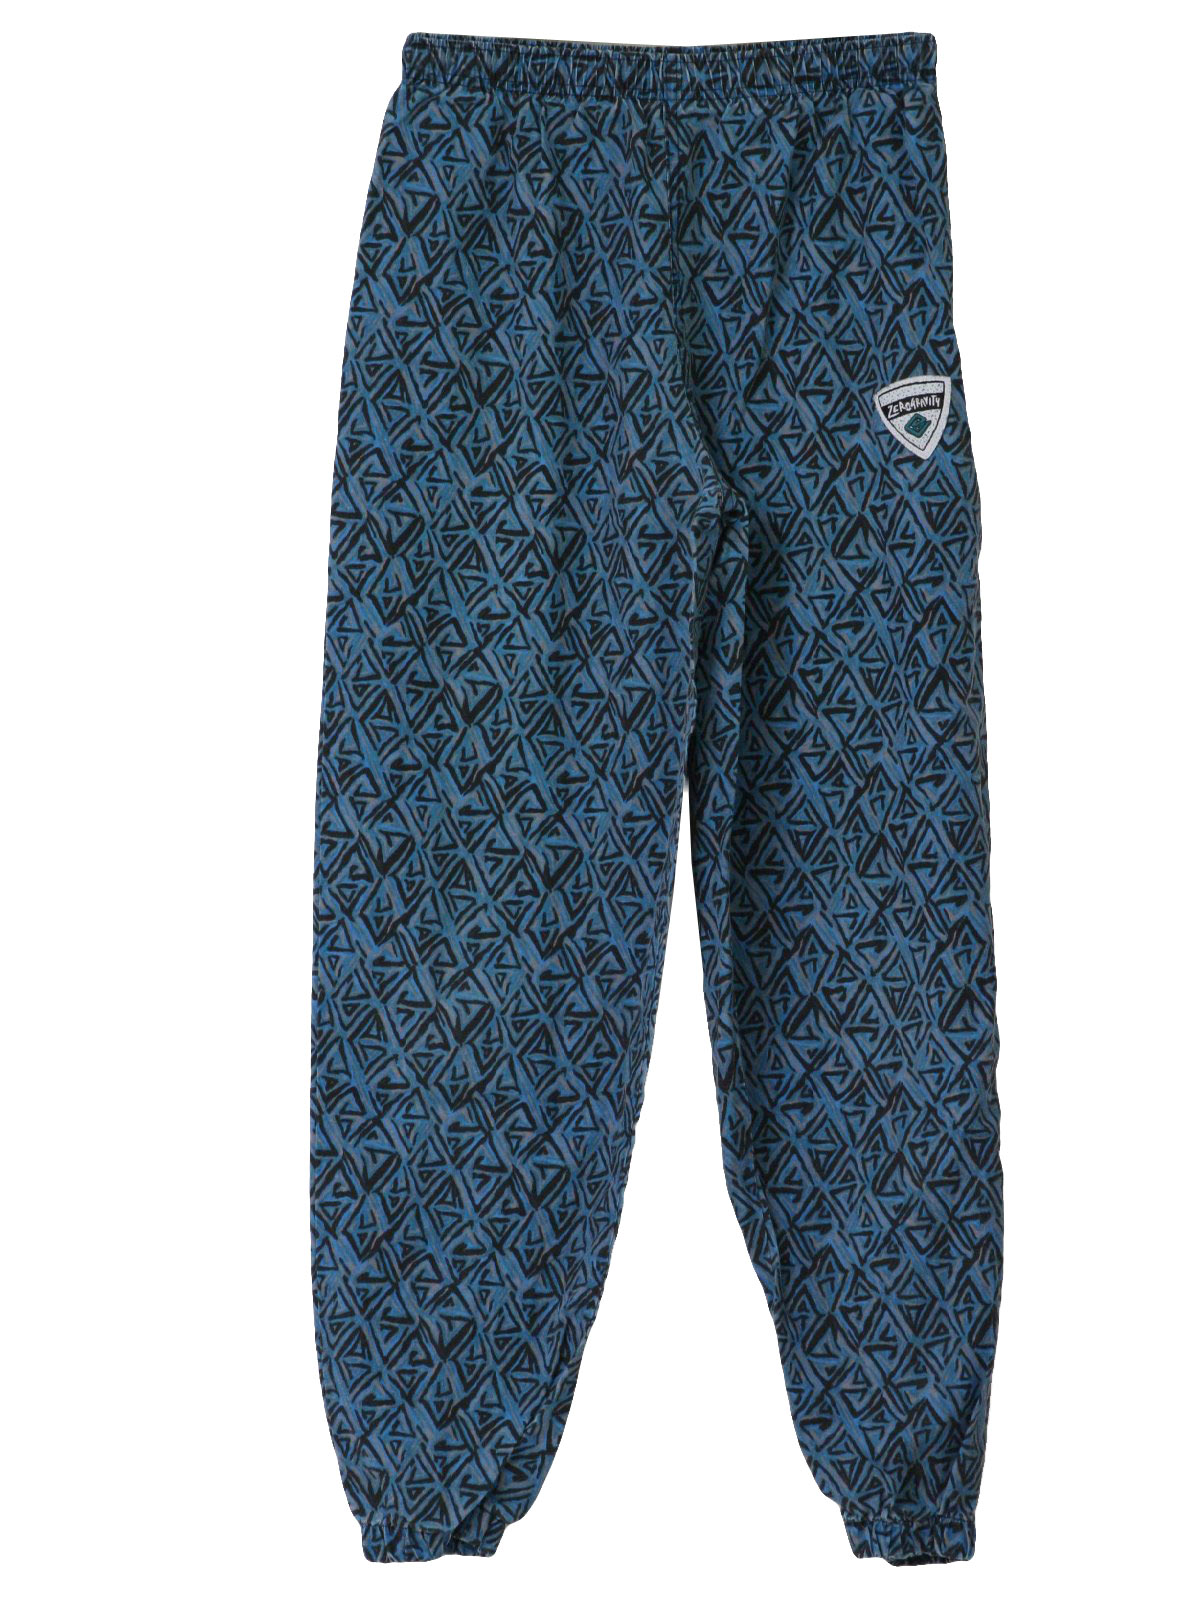 Eighties Vintage Pants: 80s -Zero Gravity- Mens teal blue, grey and ...